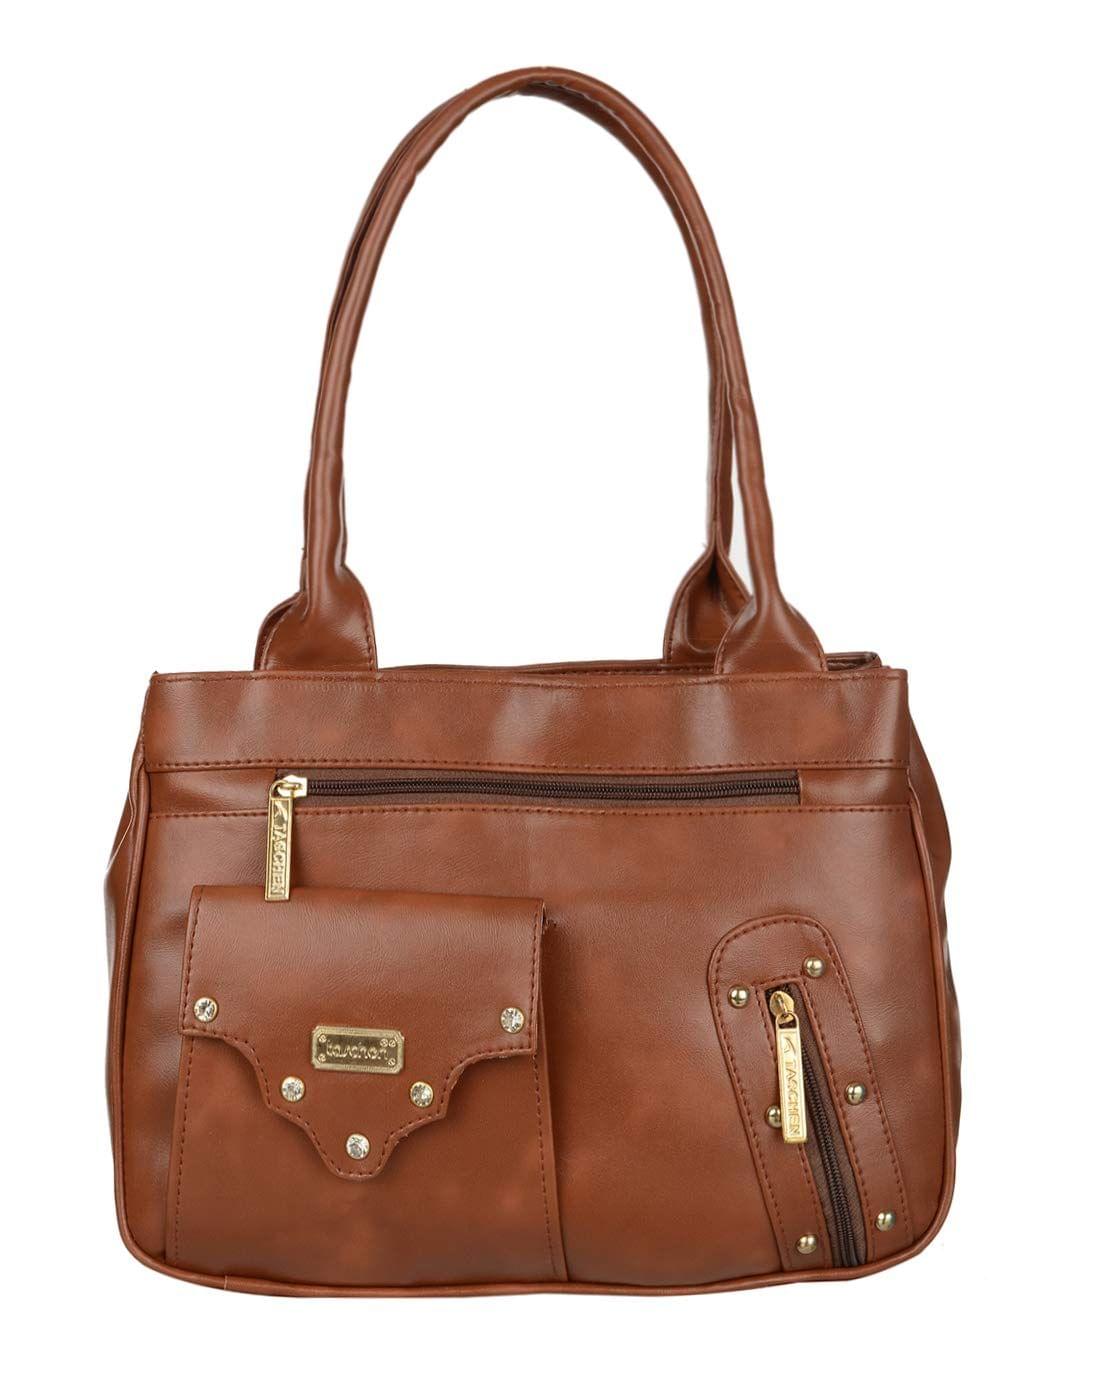 TASCHEN Women Casual Travel/Office Handbag (tan)